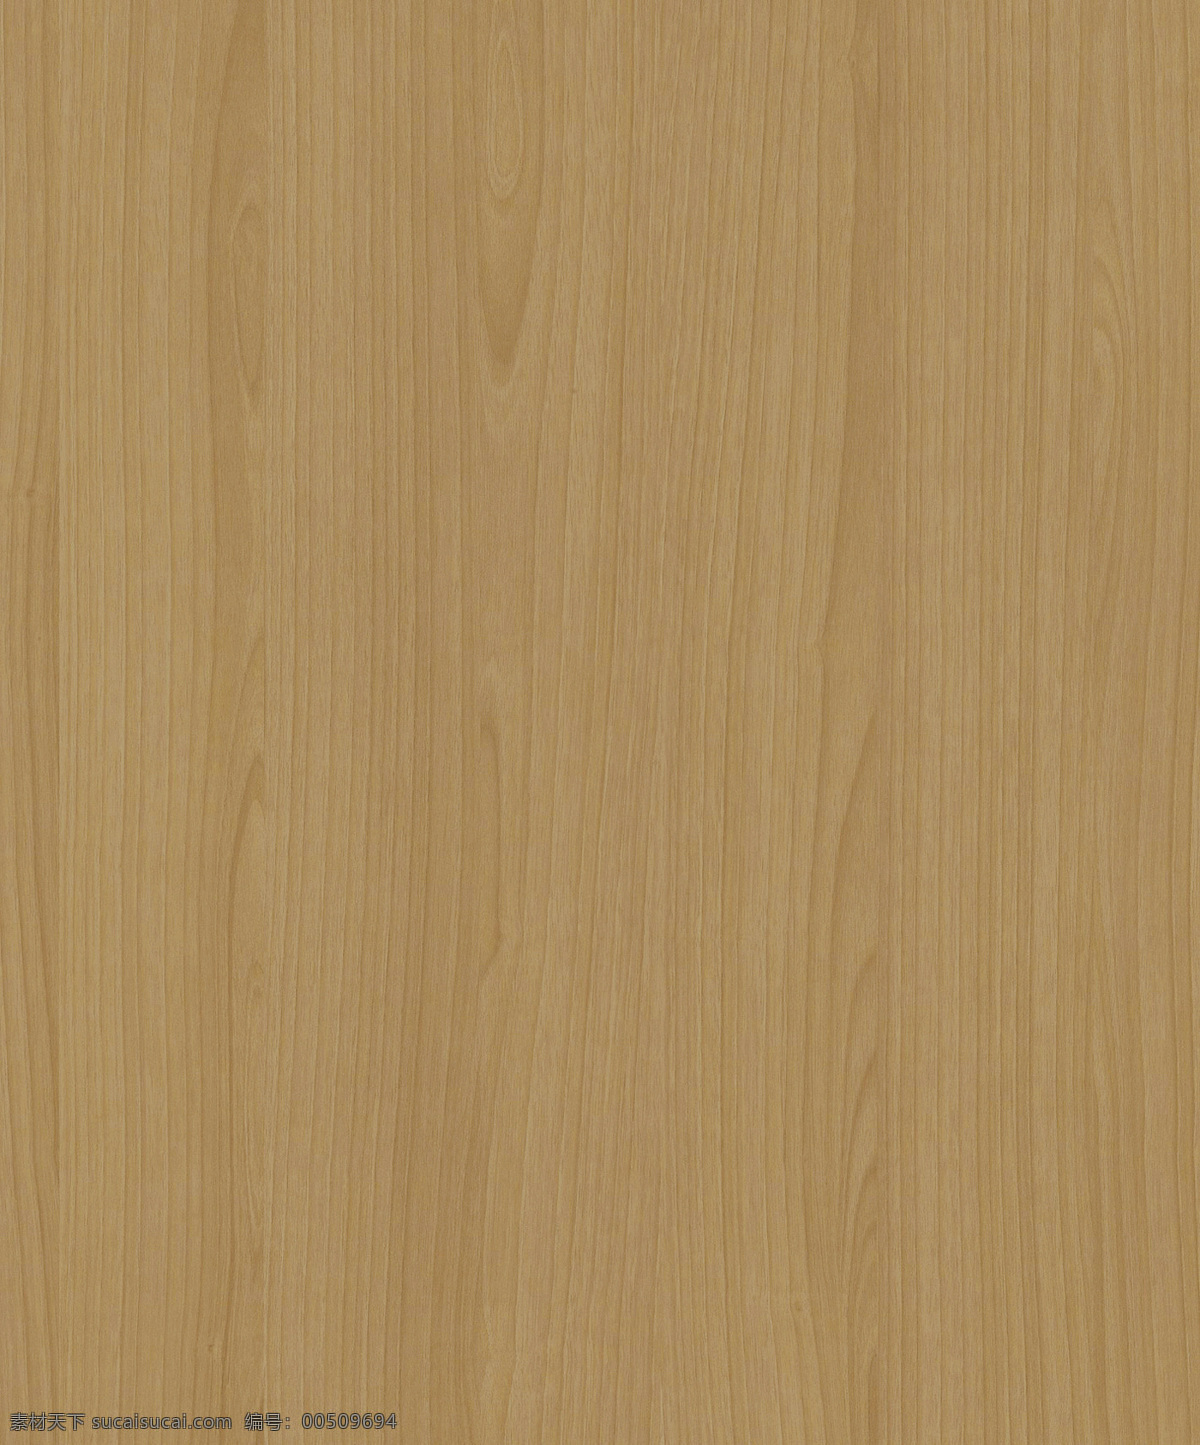 vray 木纹 材质 max9 木材 土黄色 有贴图 3d模型素材 材质贴图